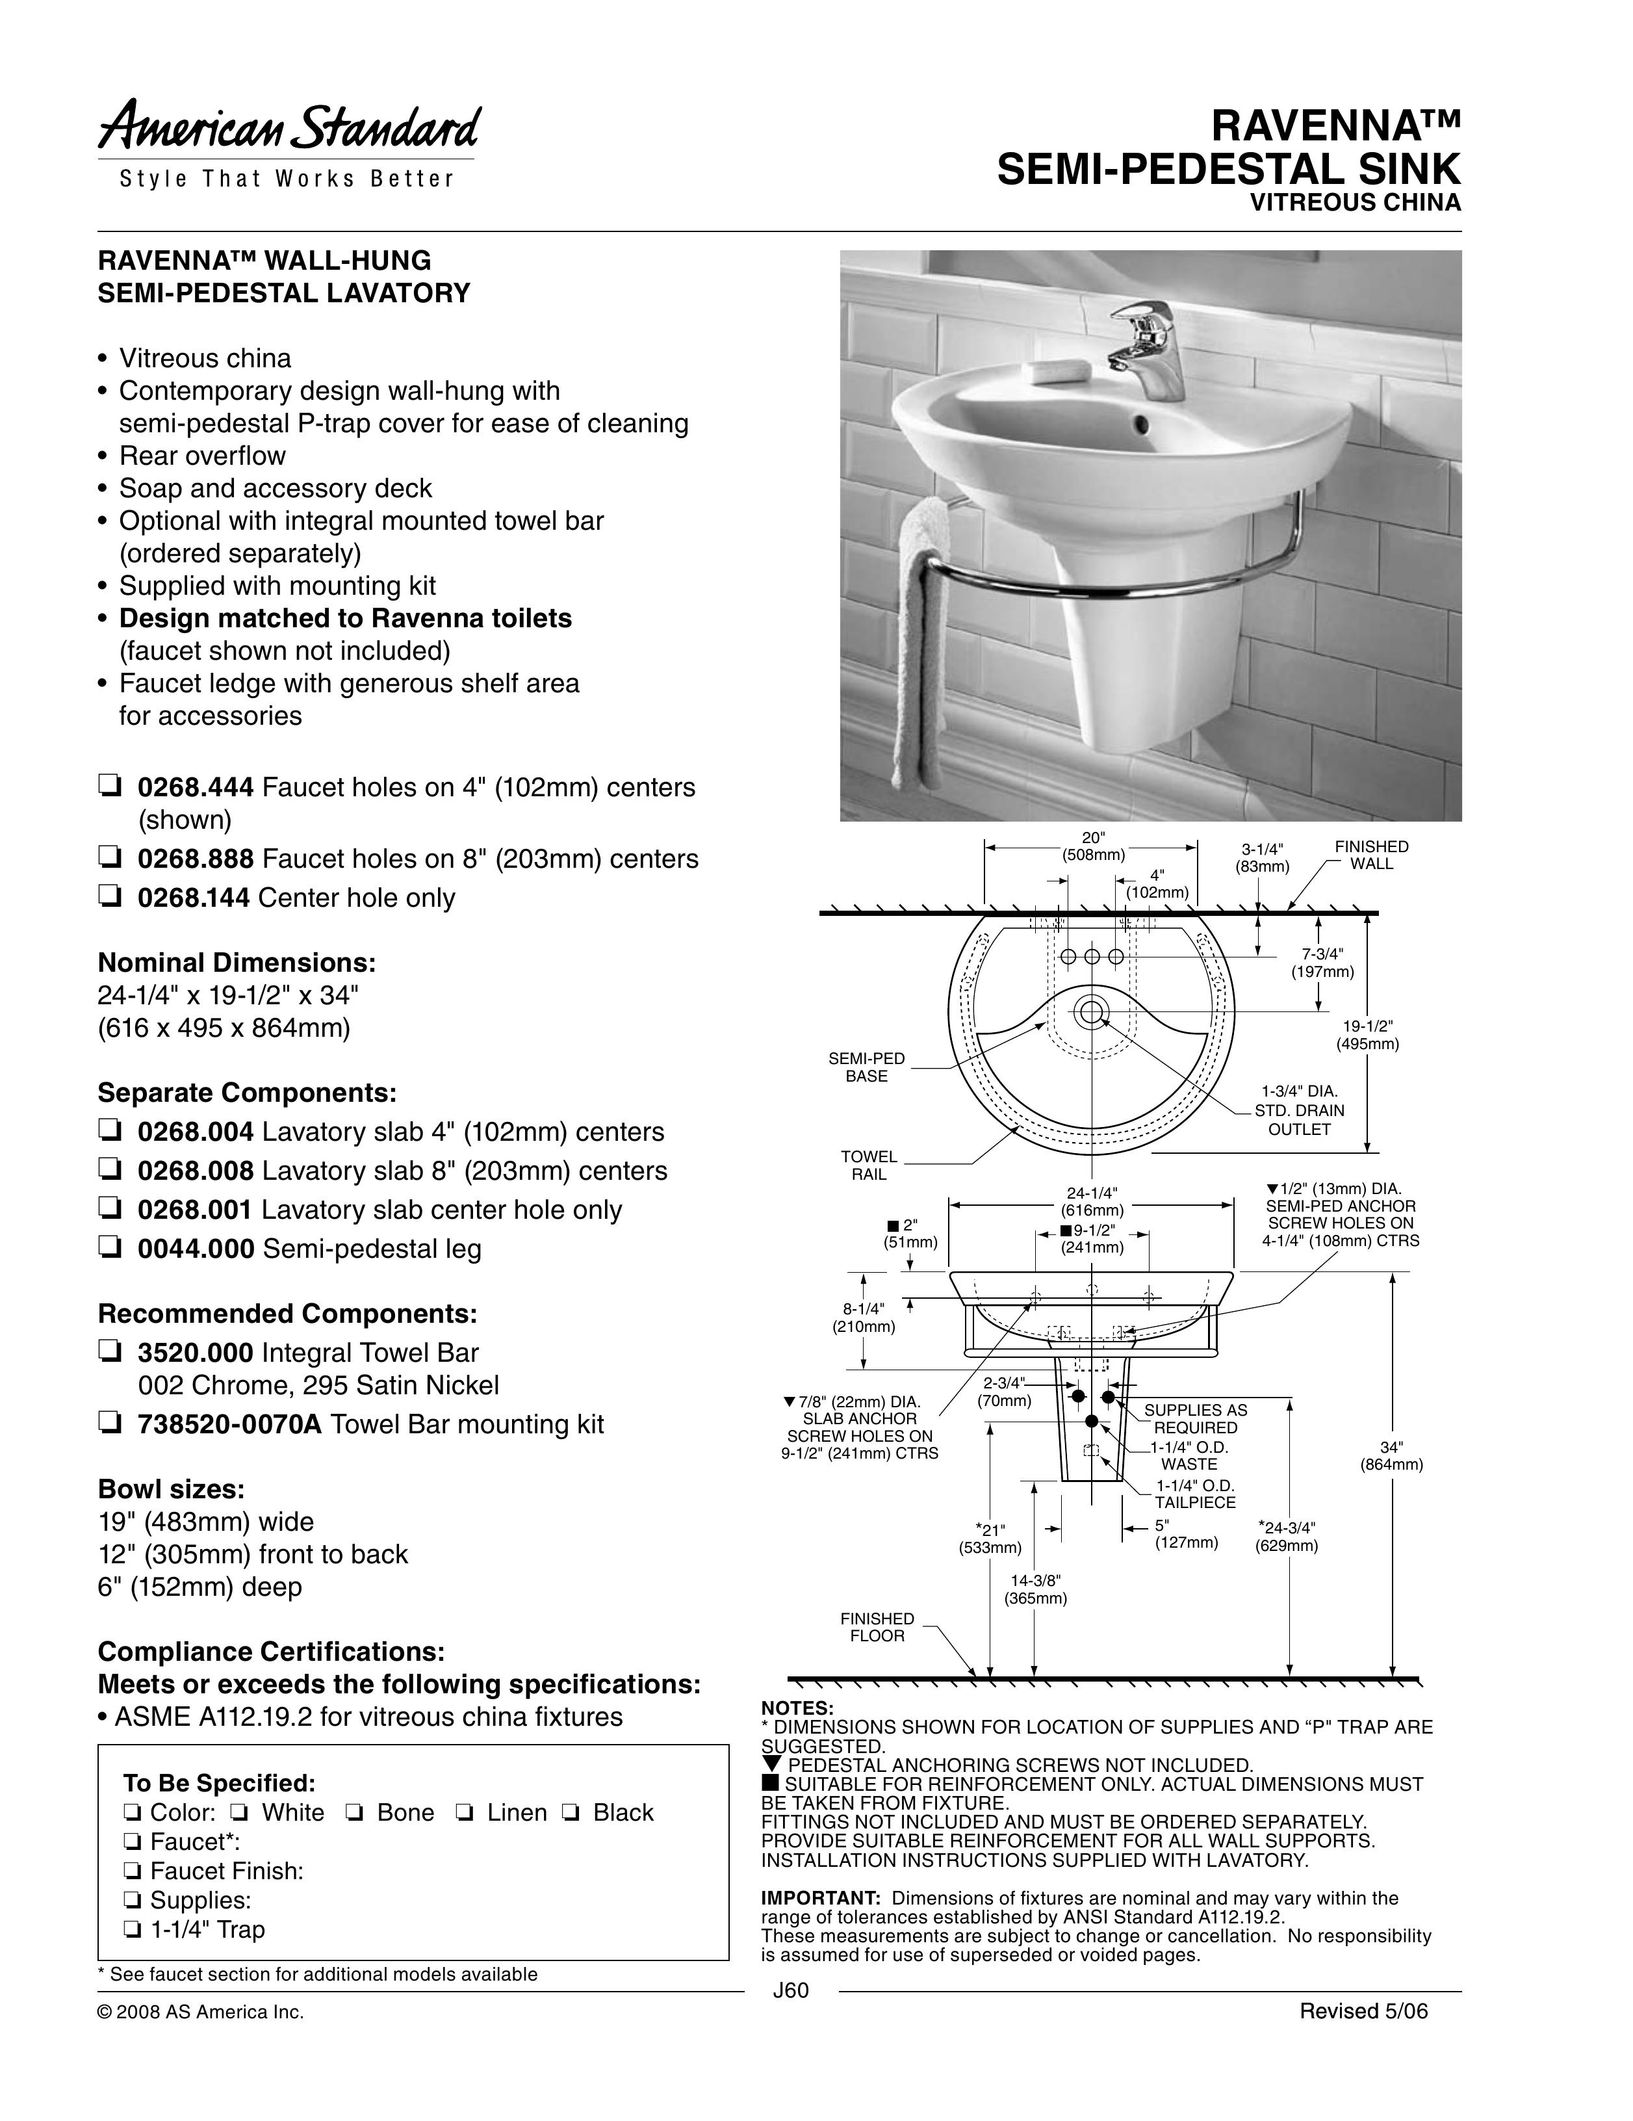 American Standard 0044.000 Indoor Furnishings User Manual